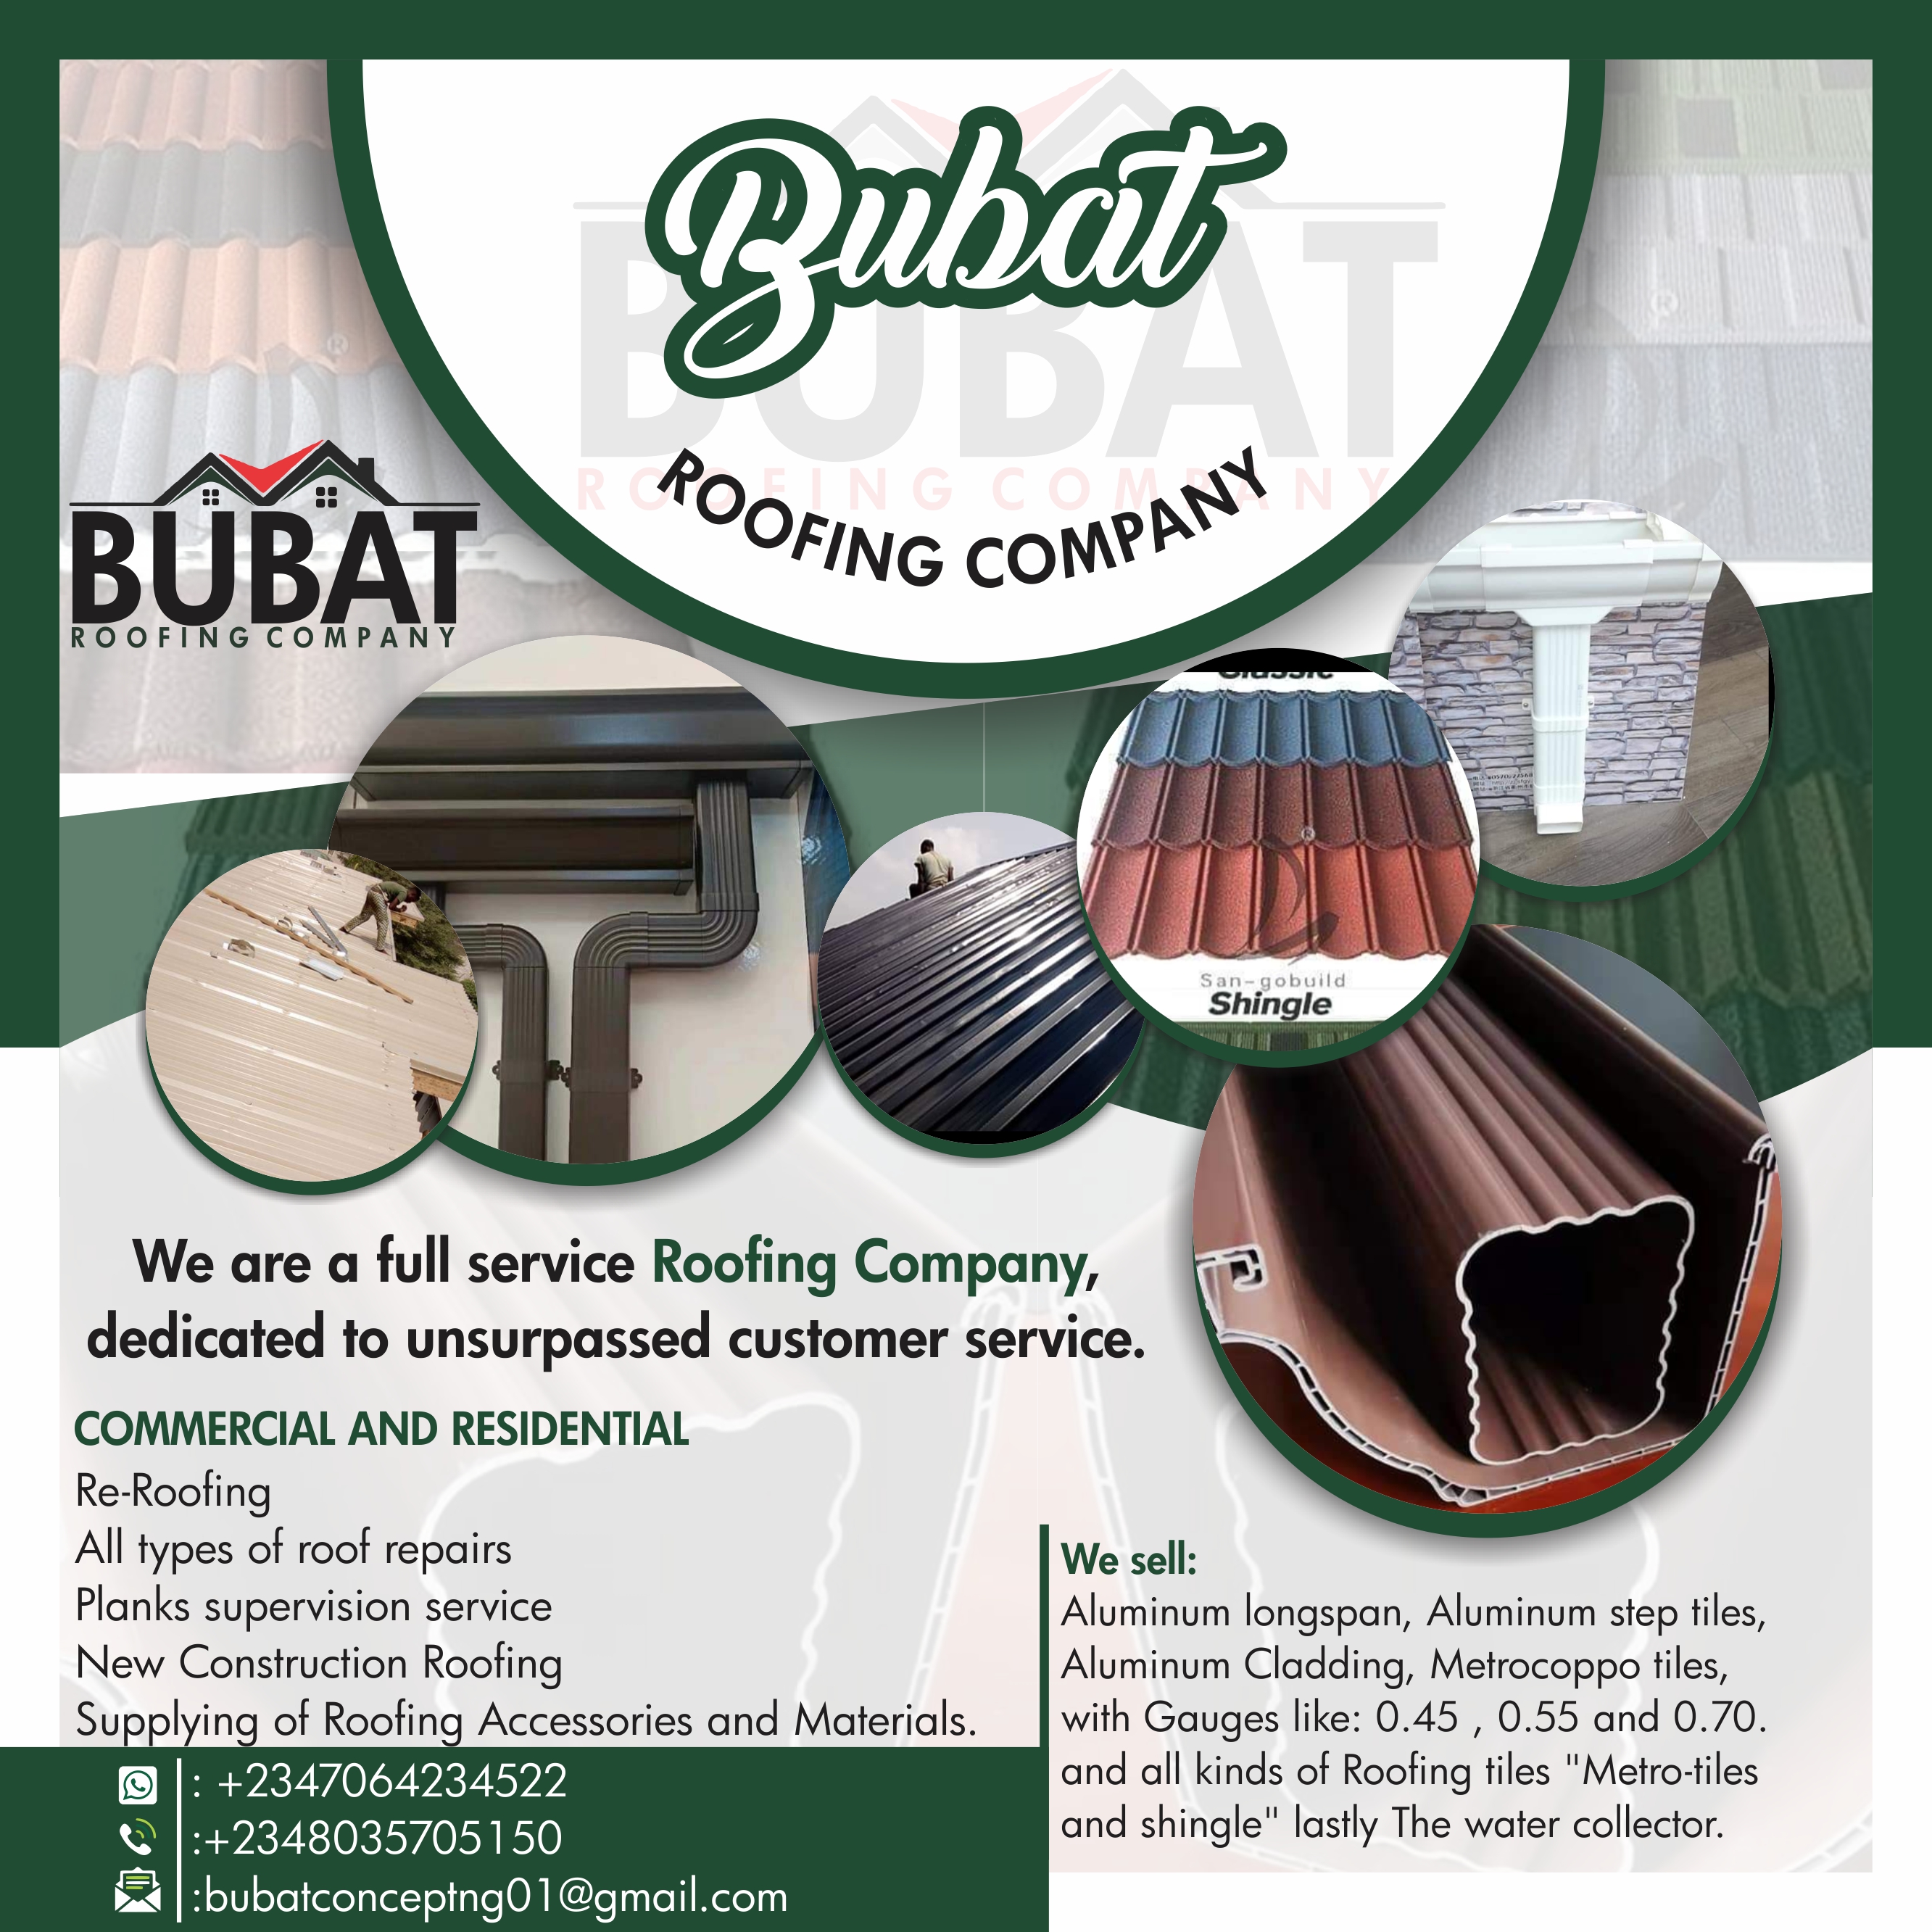 Bubat roofing company ltd provider